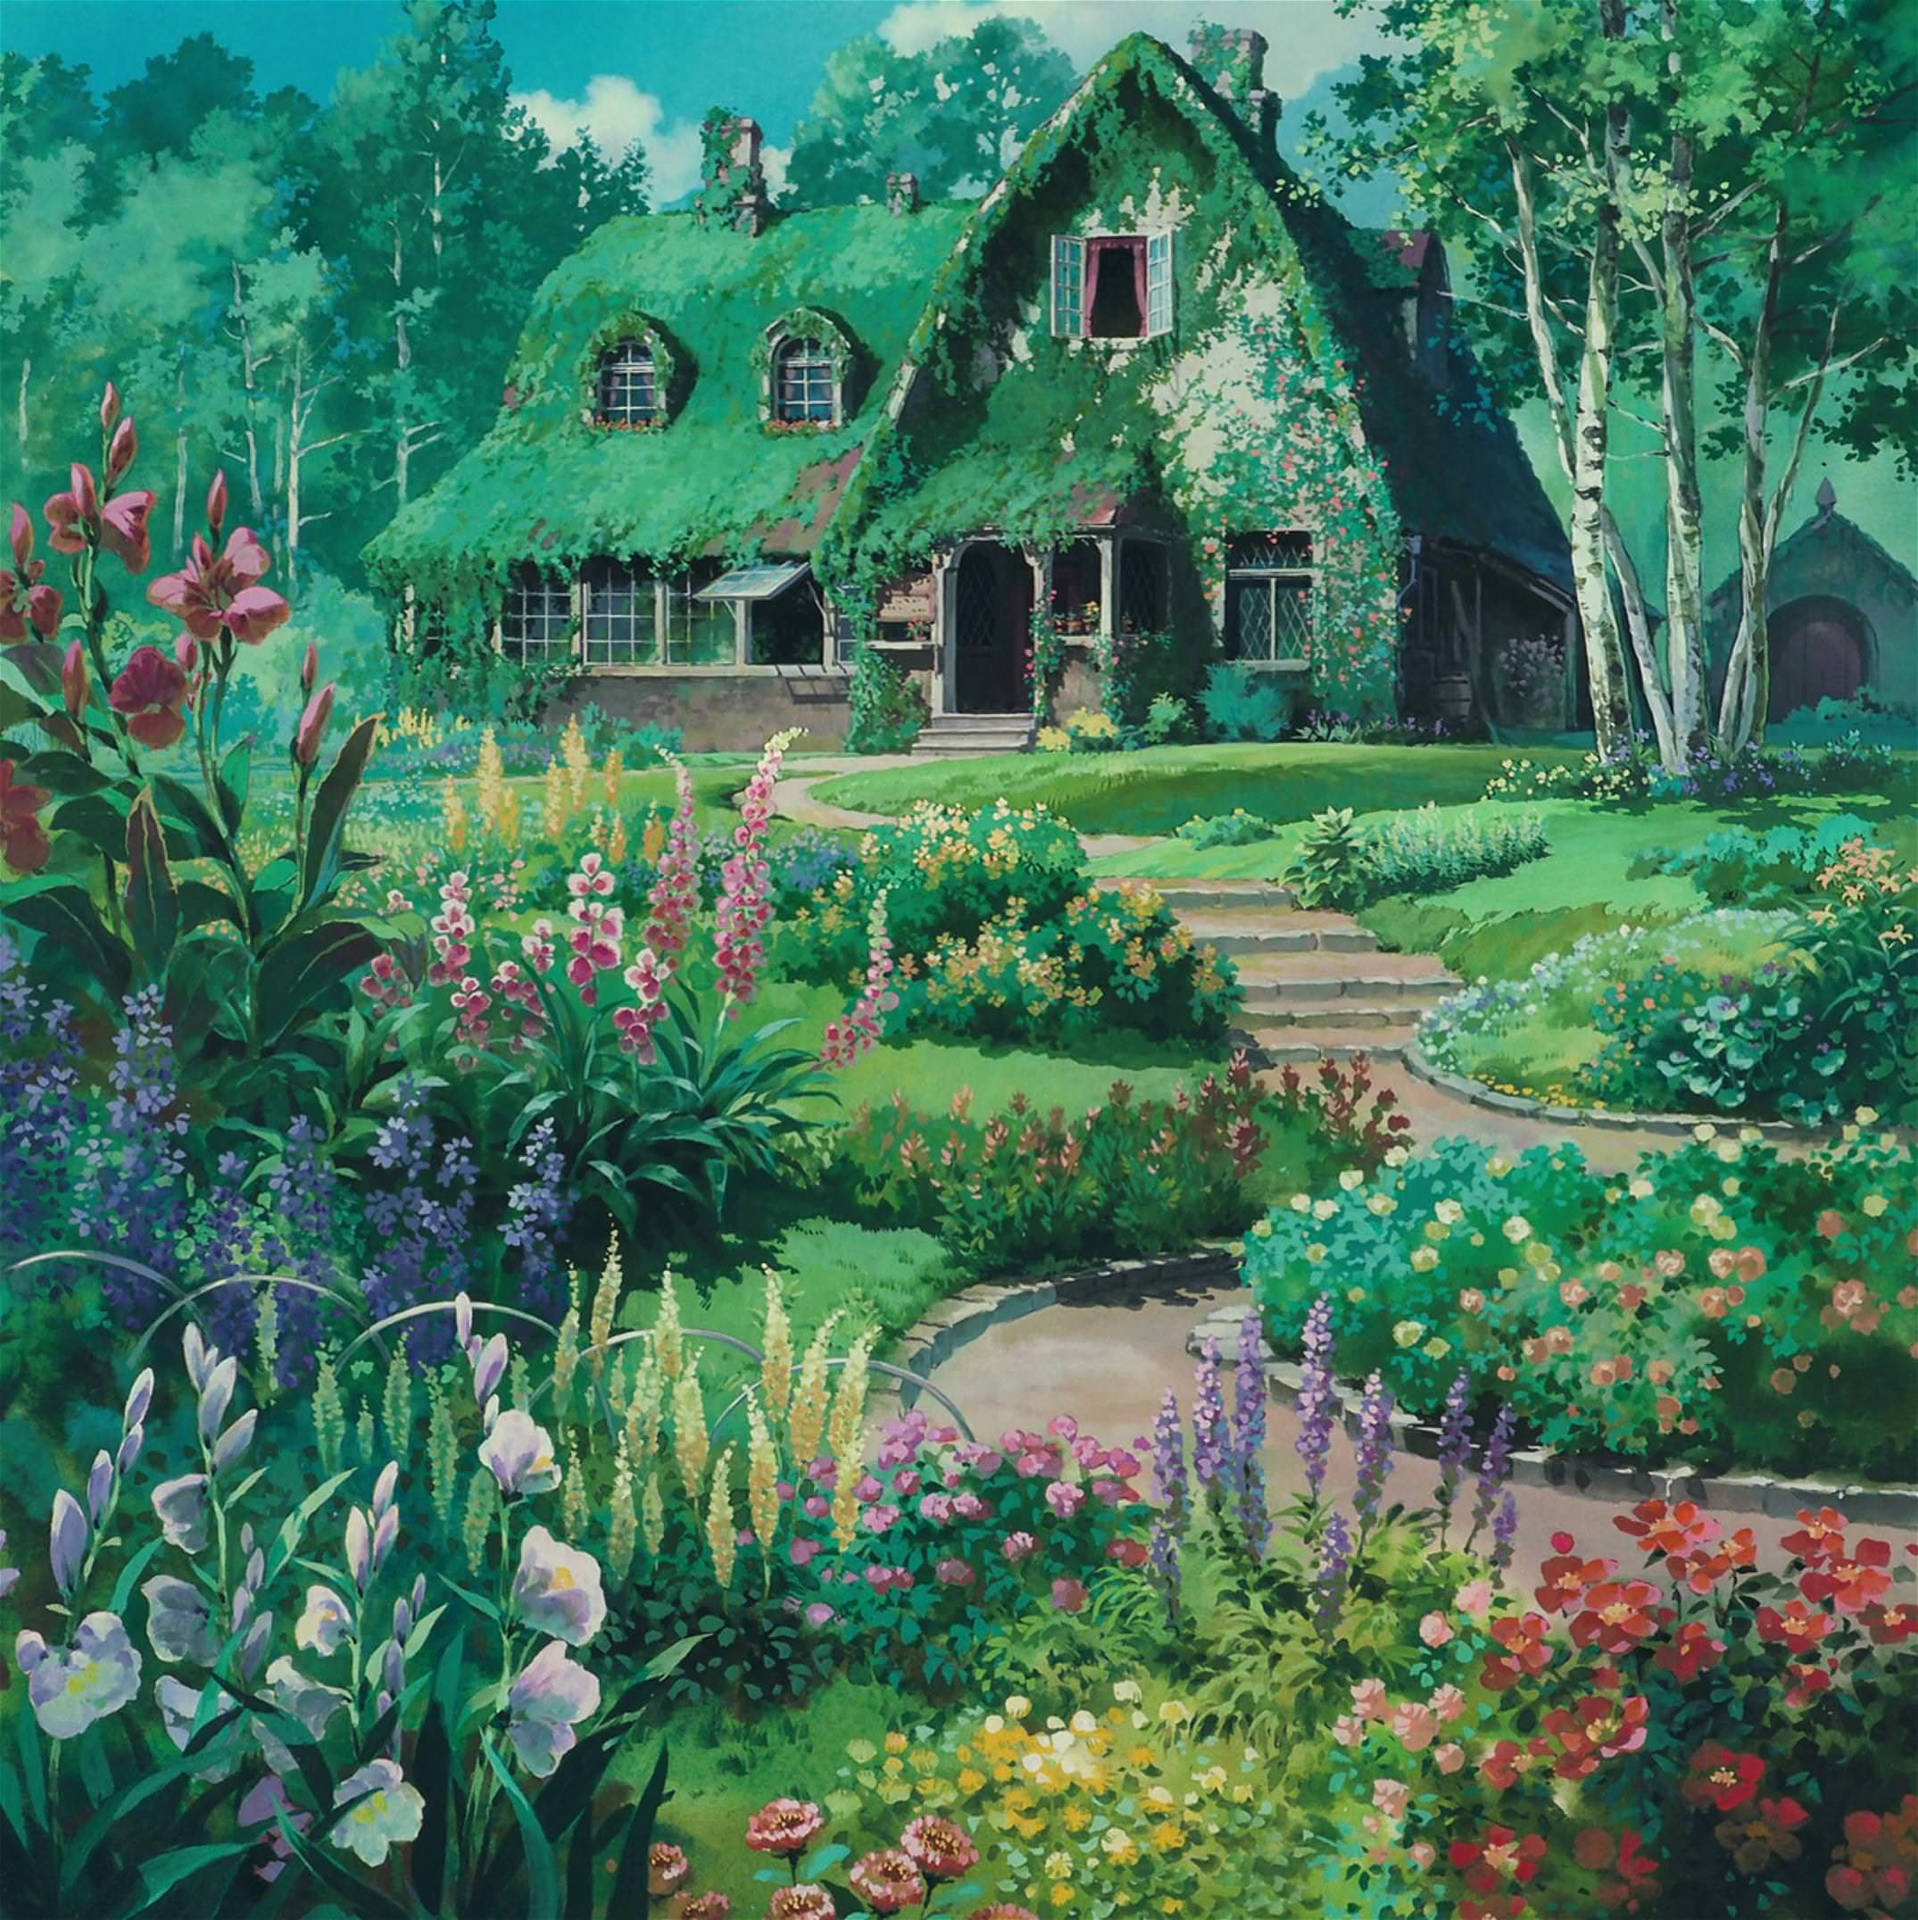 Studio Ghibli Scenery House With Garden Wallpaper